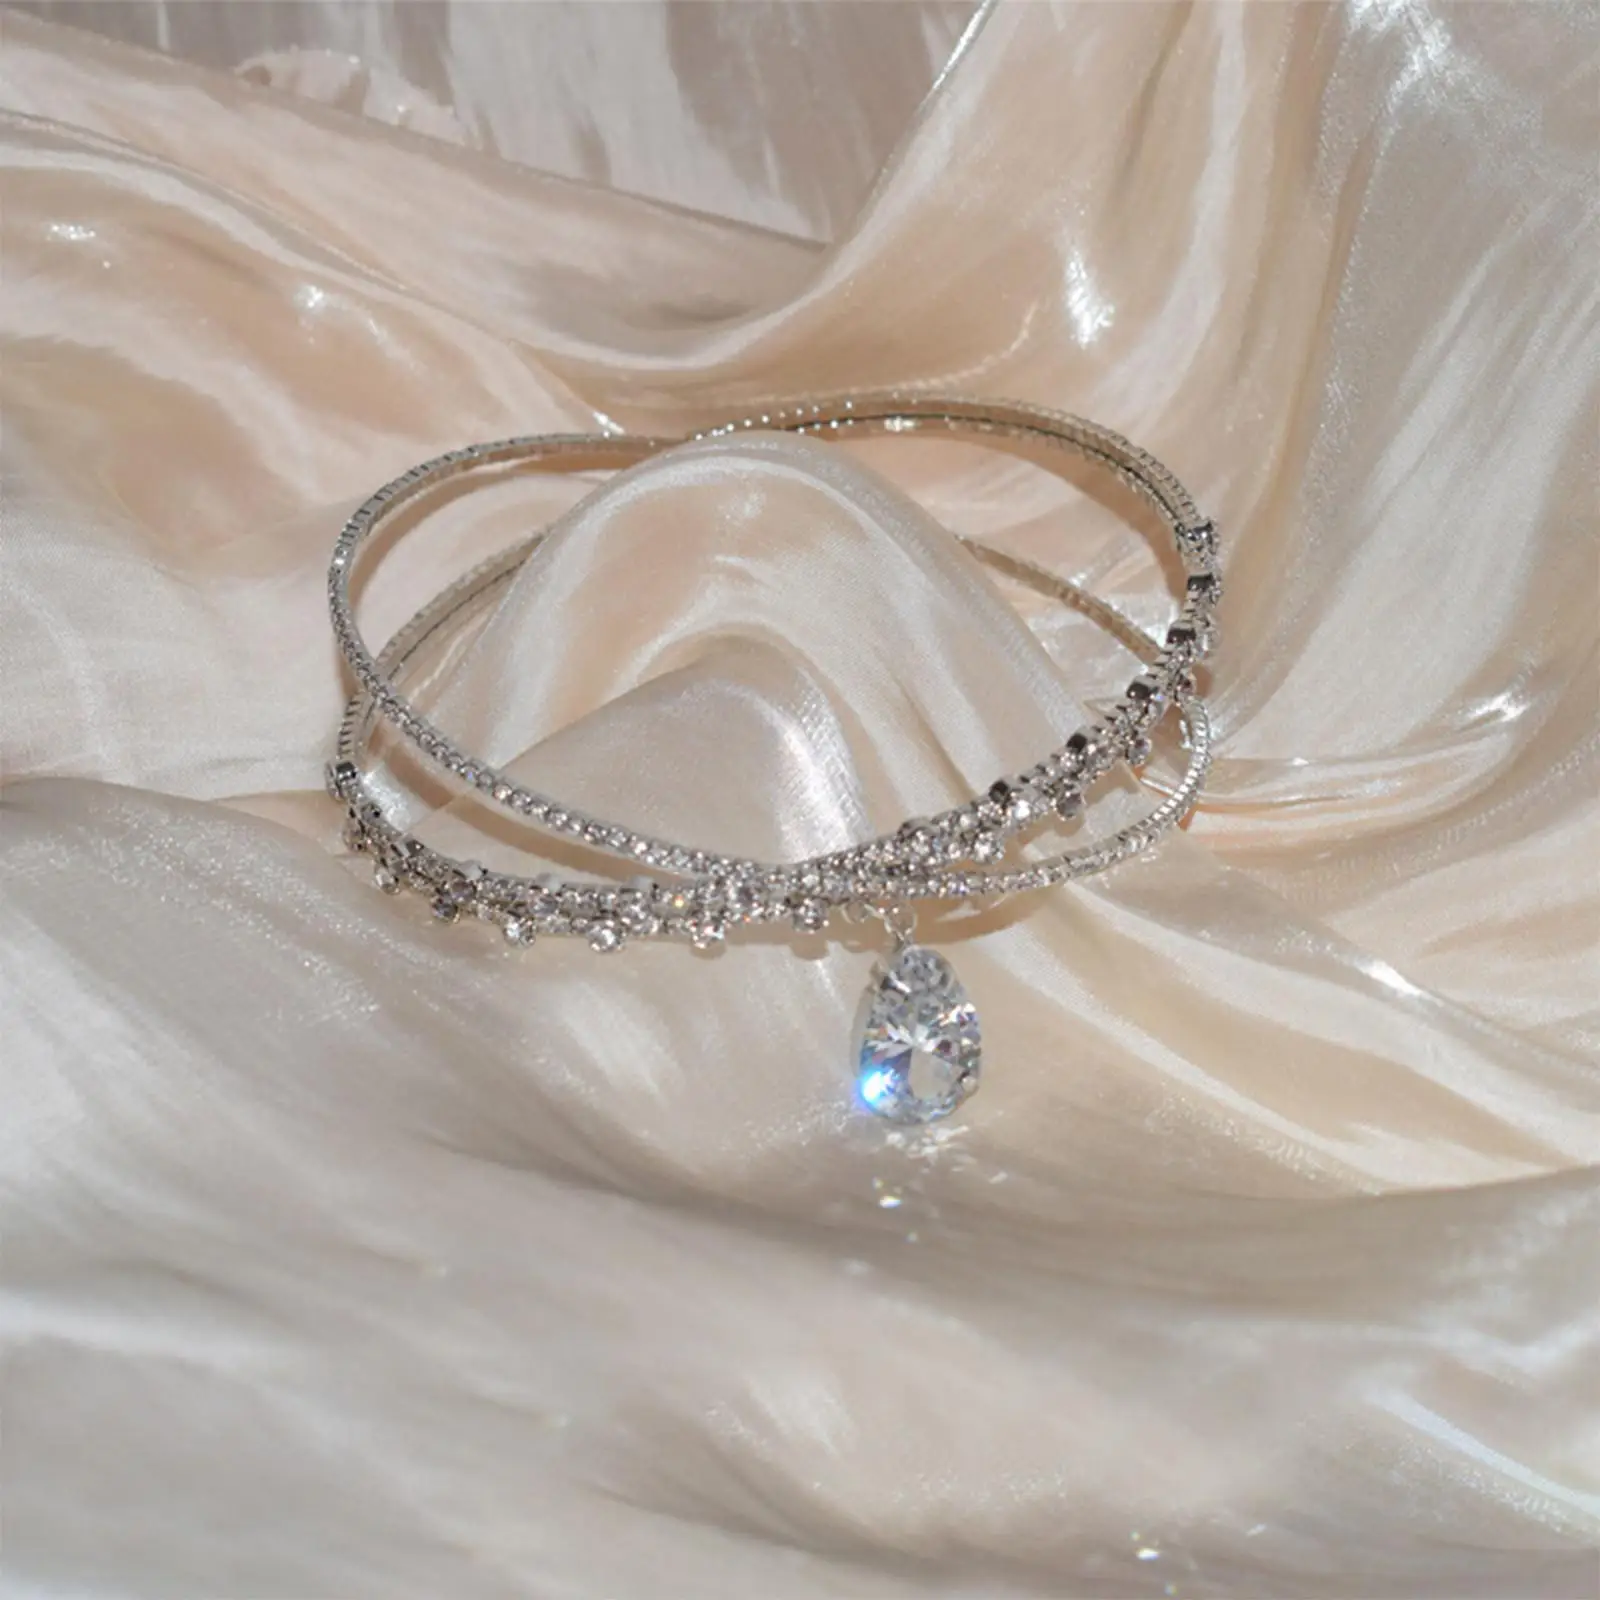 Luxury Choker Necklaces Zircon Water Drop Pendant Headdress Clavicle Chain Neck Jewelry for Nightclub Birthday Women and Girls